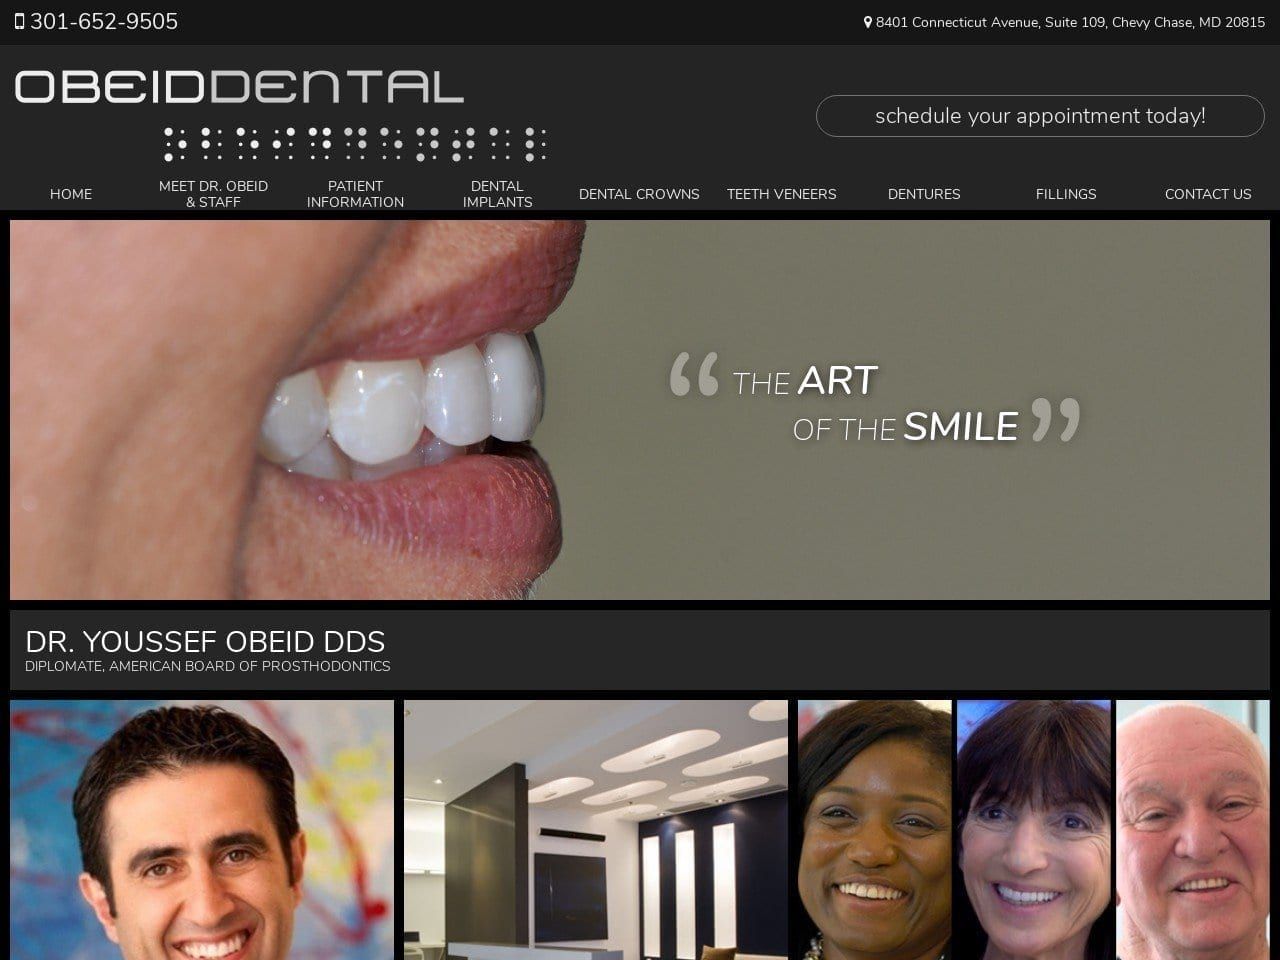 Obeid Dental Website Screenshot from obeiddental.com